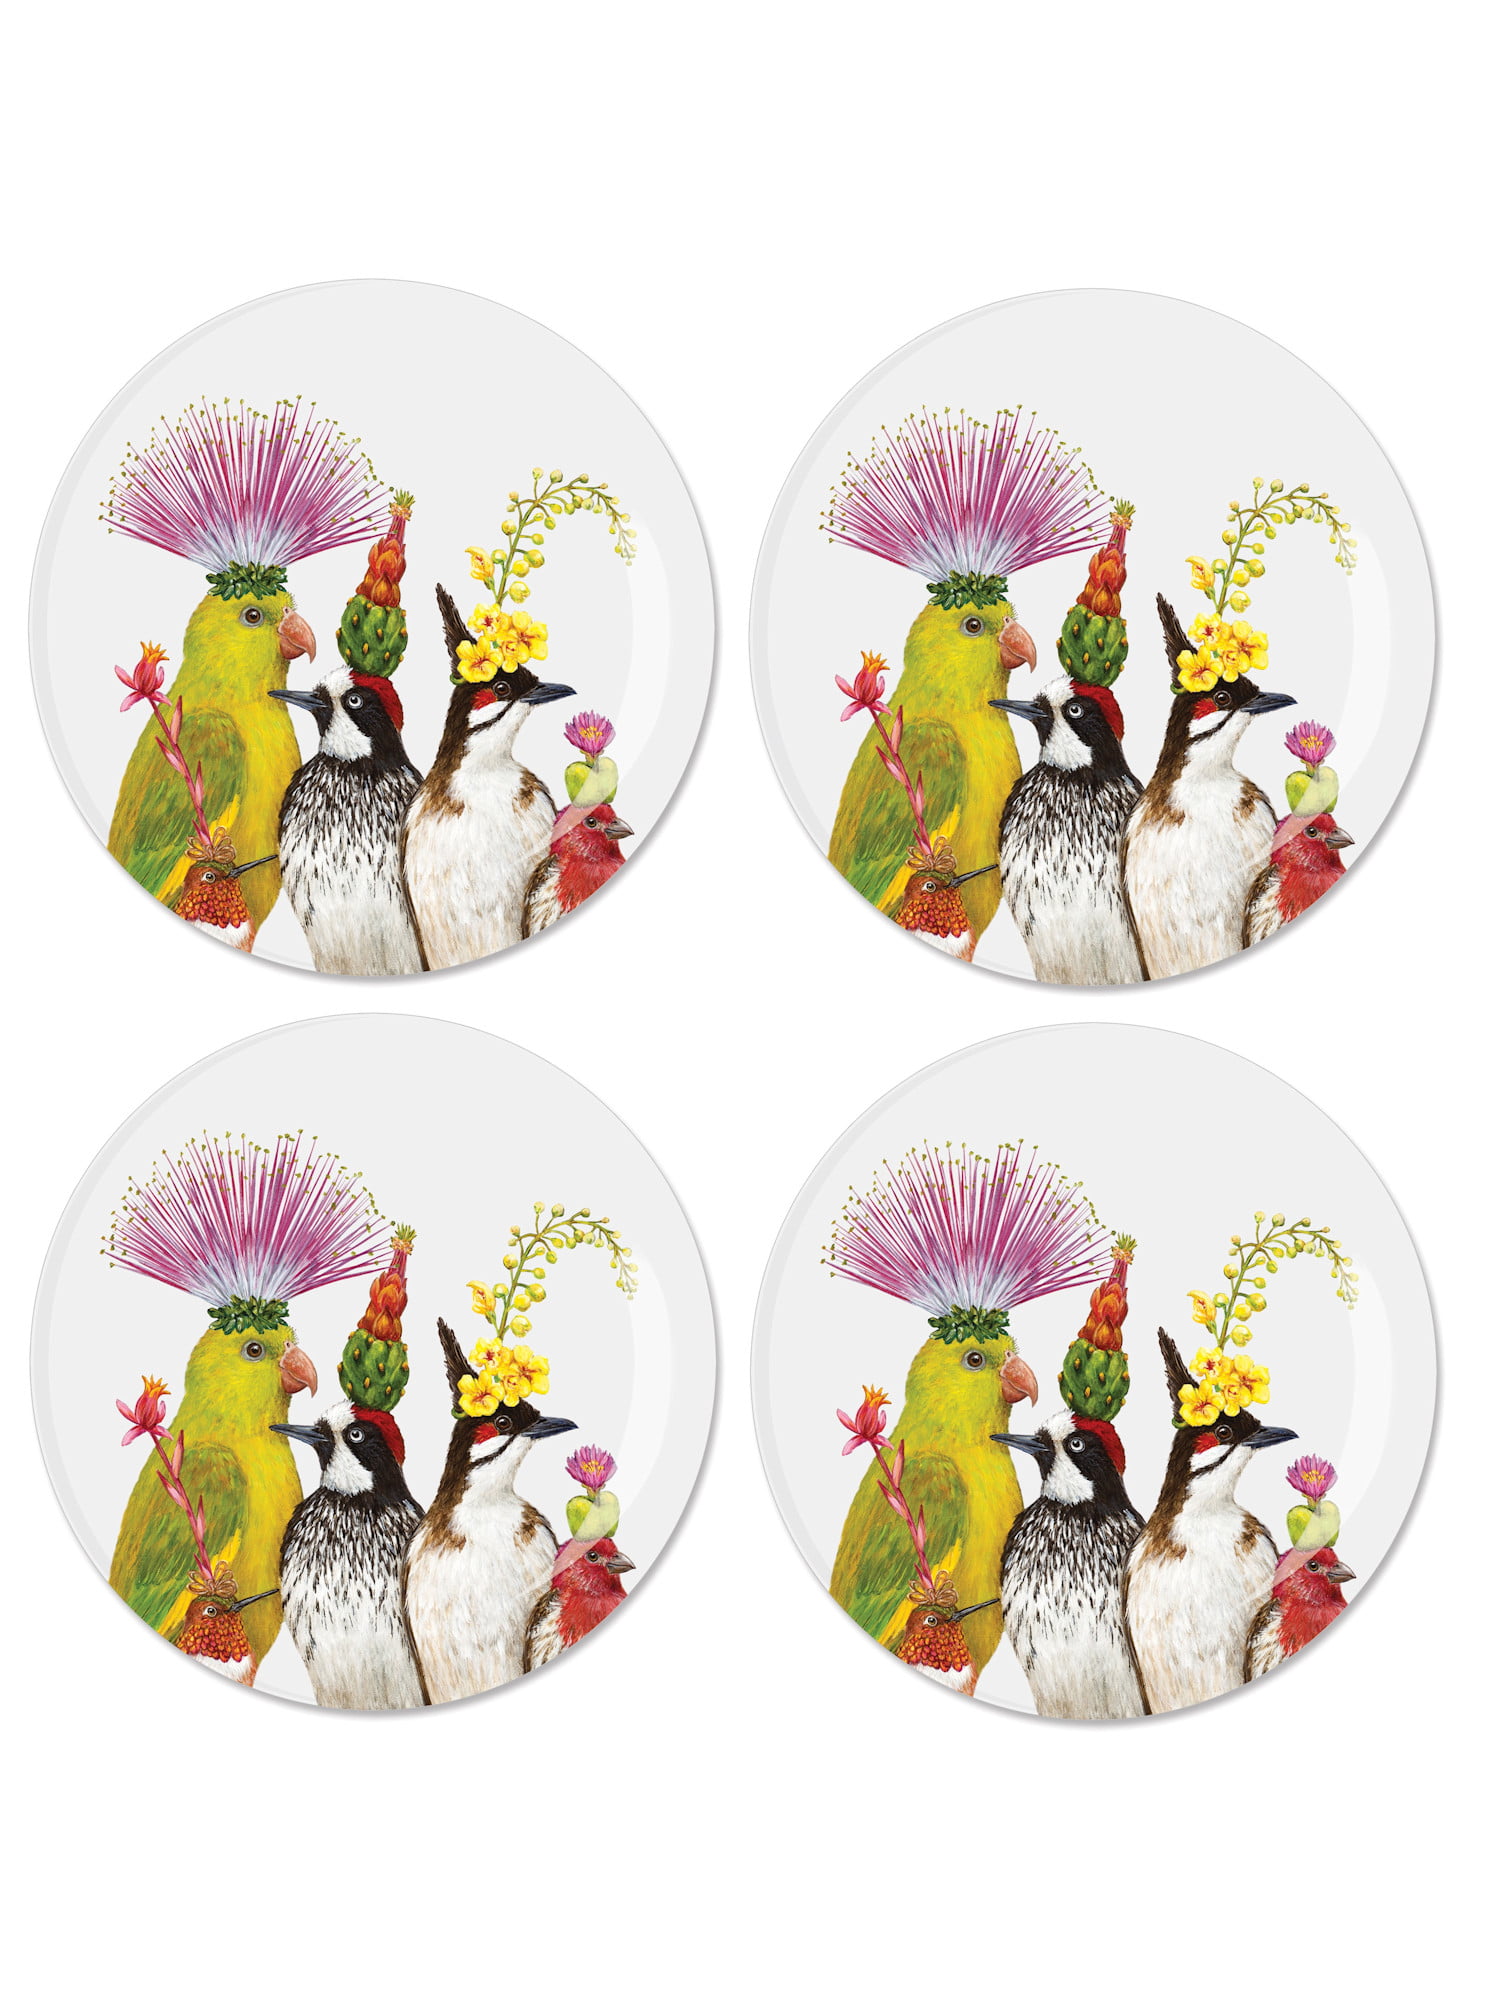 Paperproducts Design Vicki Sawyer 7 Entourage Plates Bone China Birds in Hats Set of 4 Desert Salad Plates 